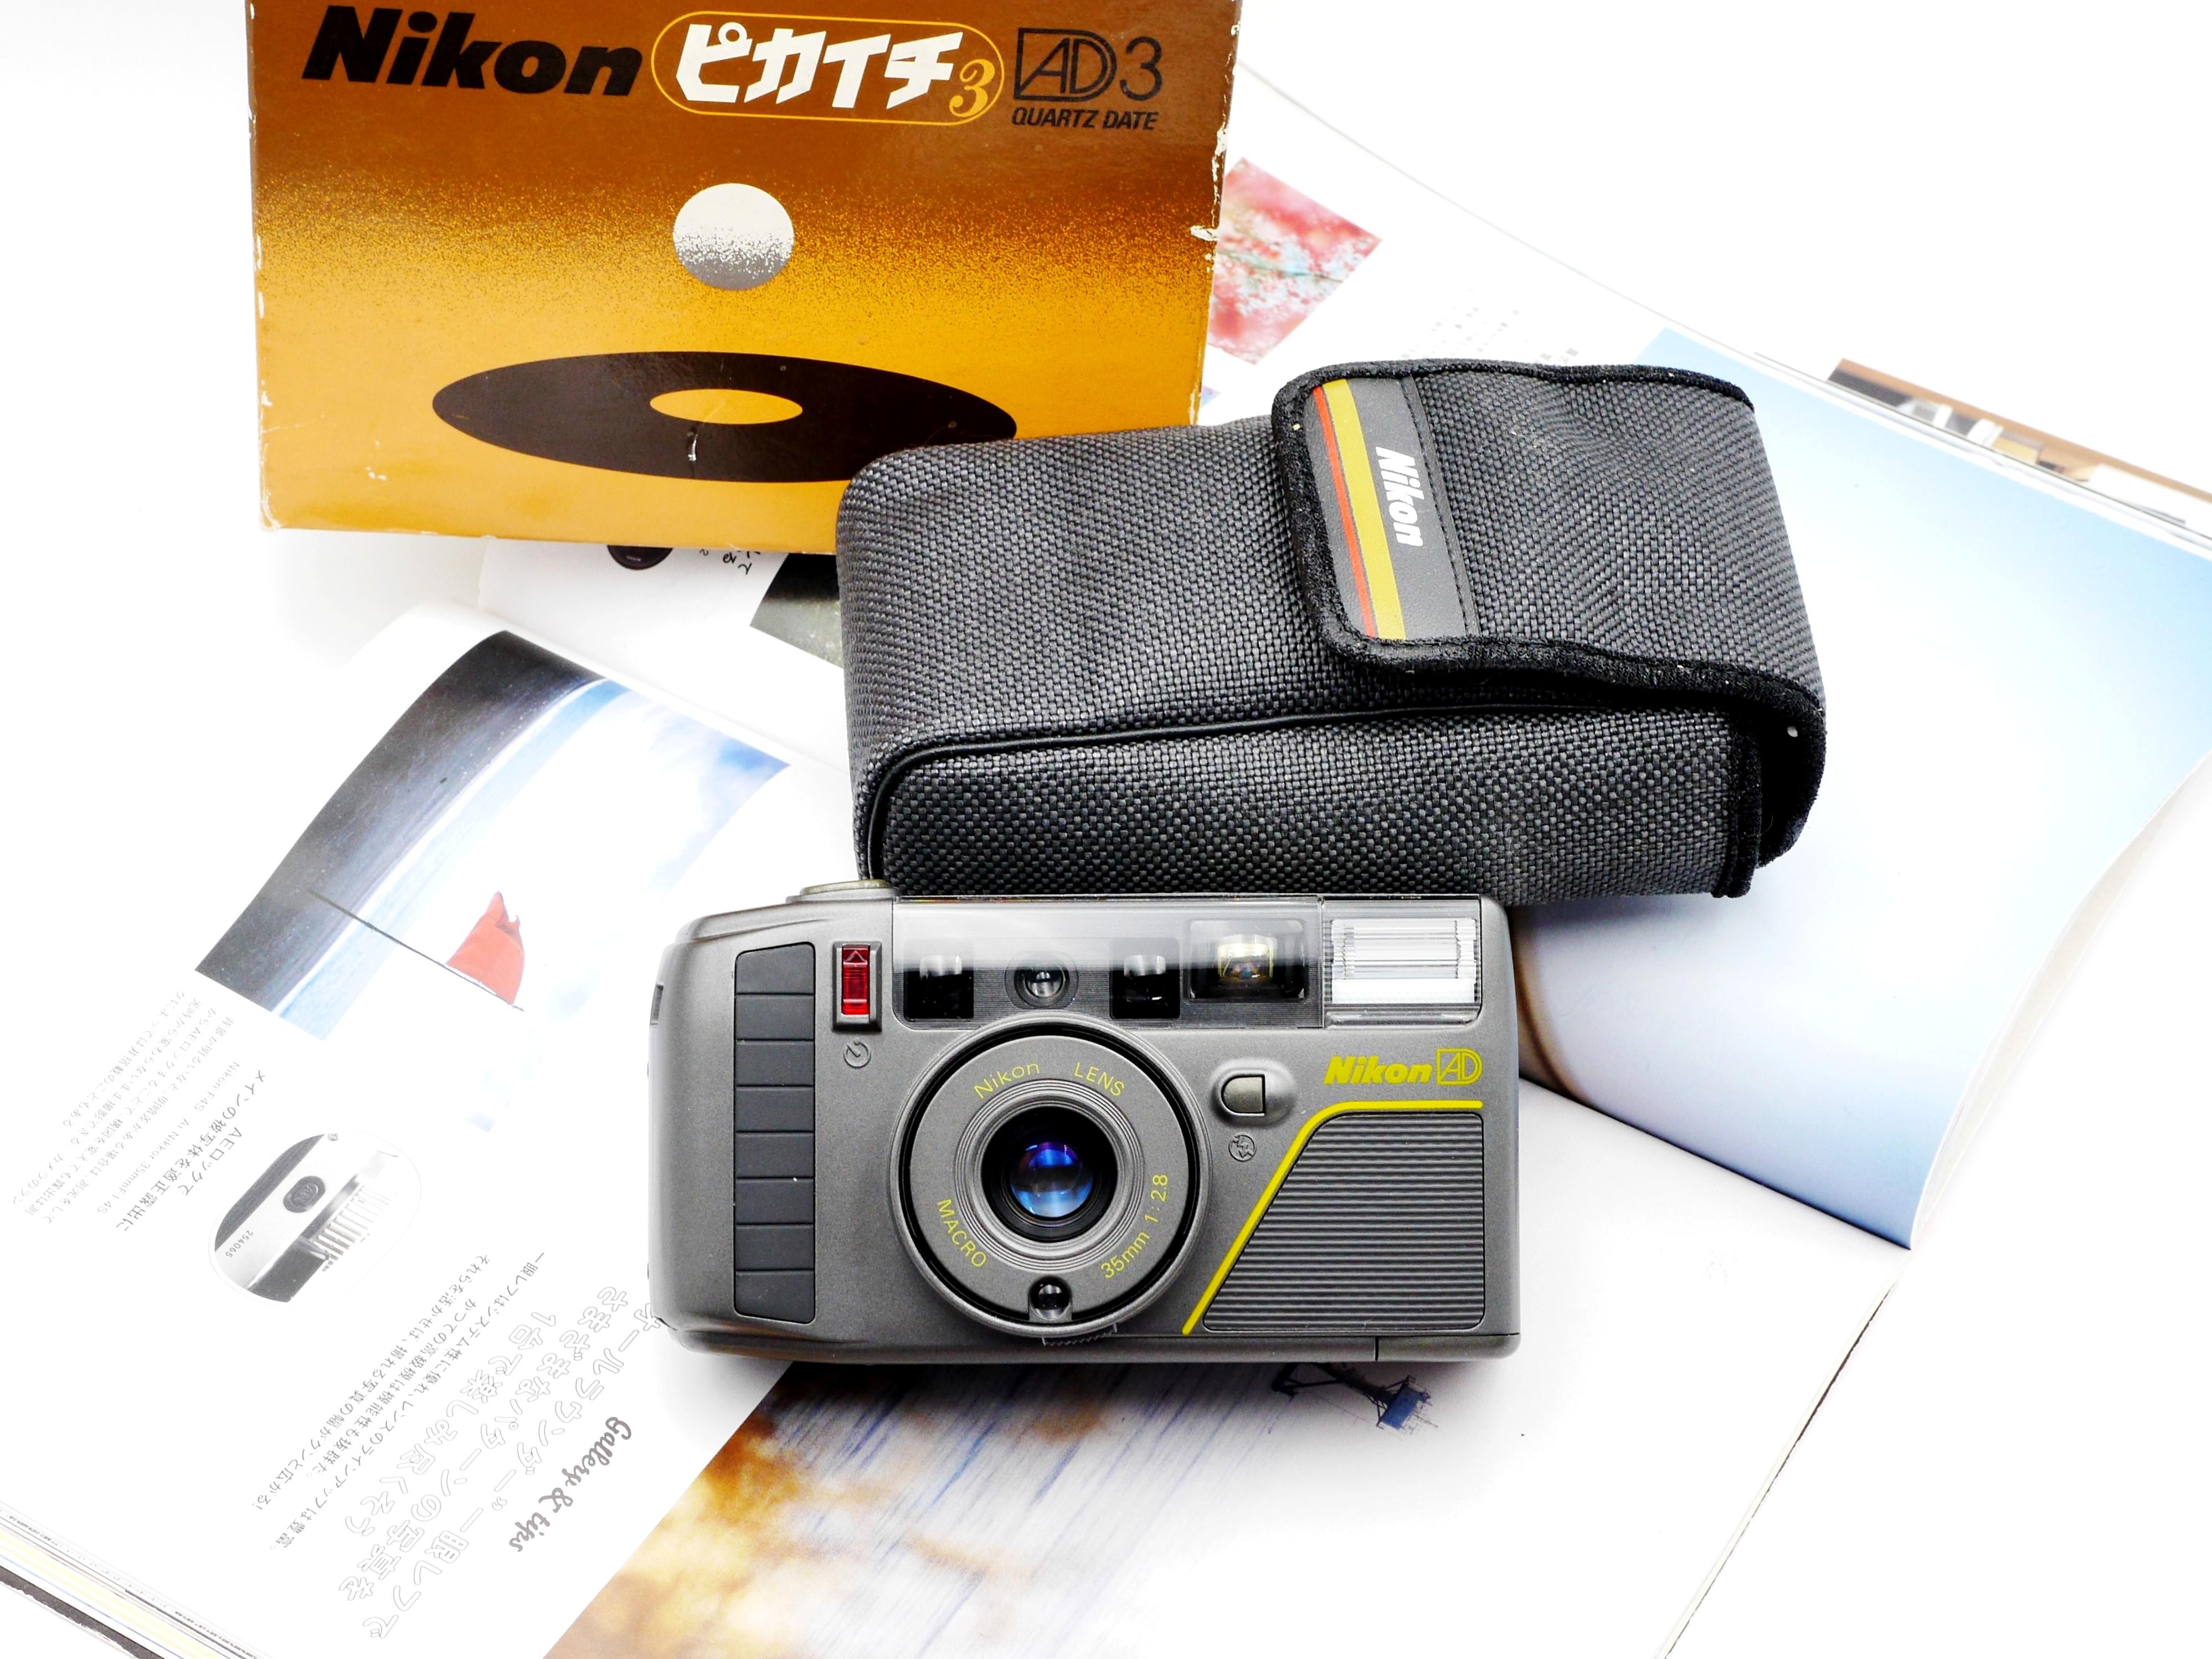 Nikon L35AD3